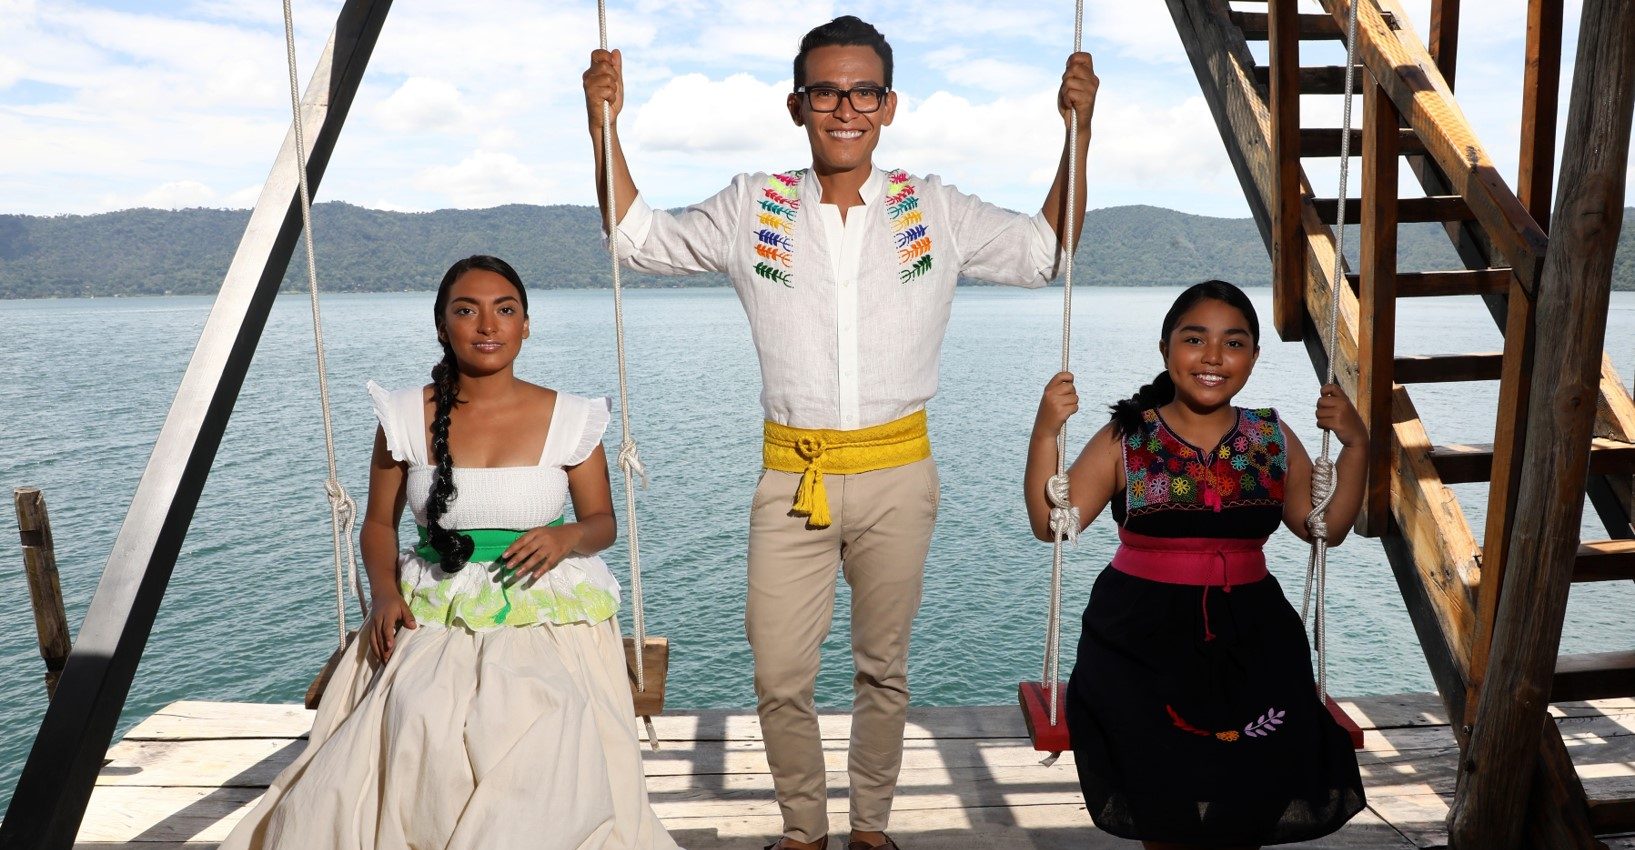 El cantante salvadoreño, Kime, lanza «Cipota morena» - Diario El Salvador